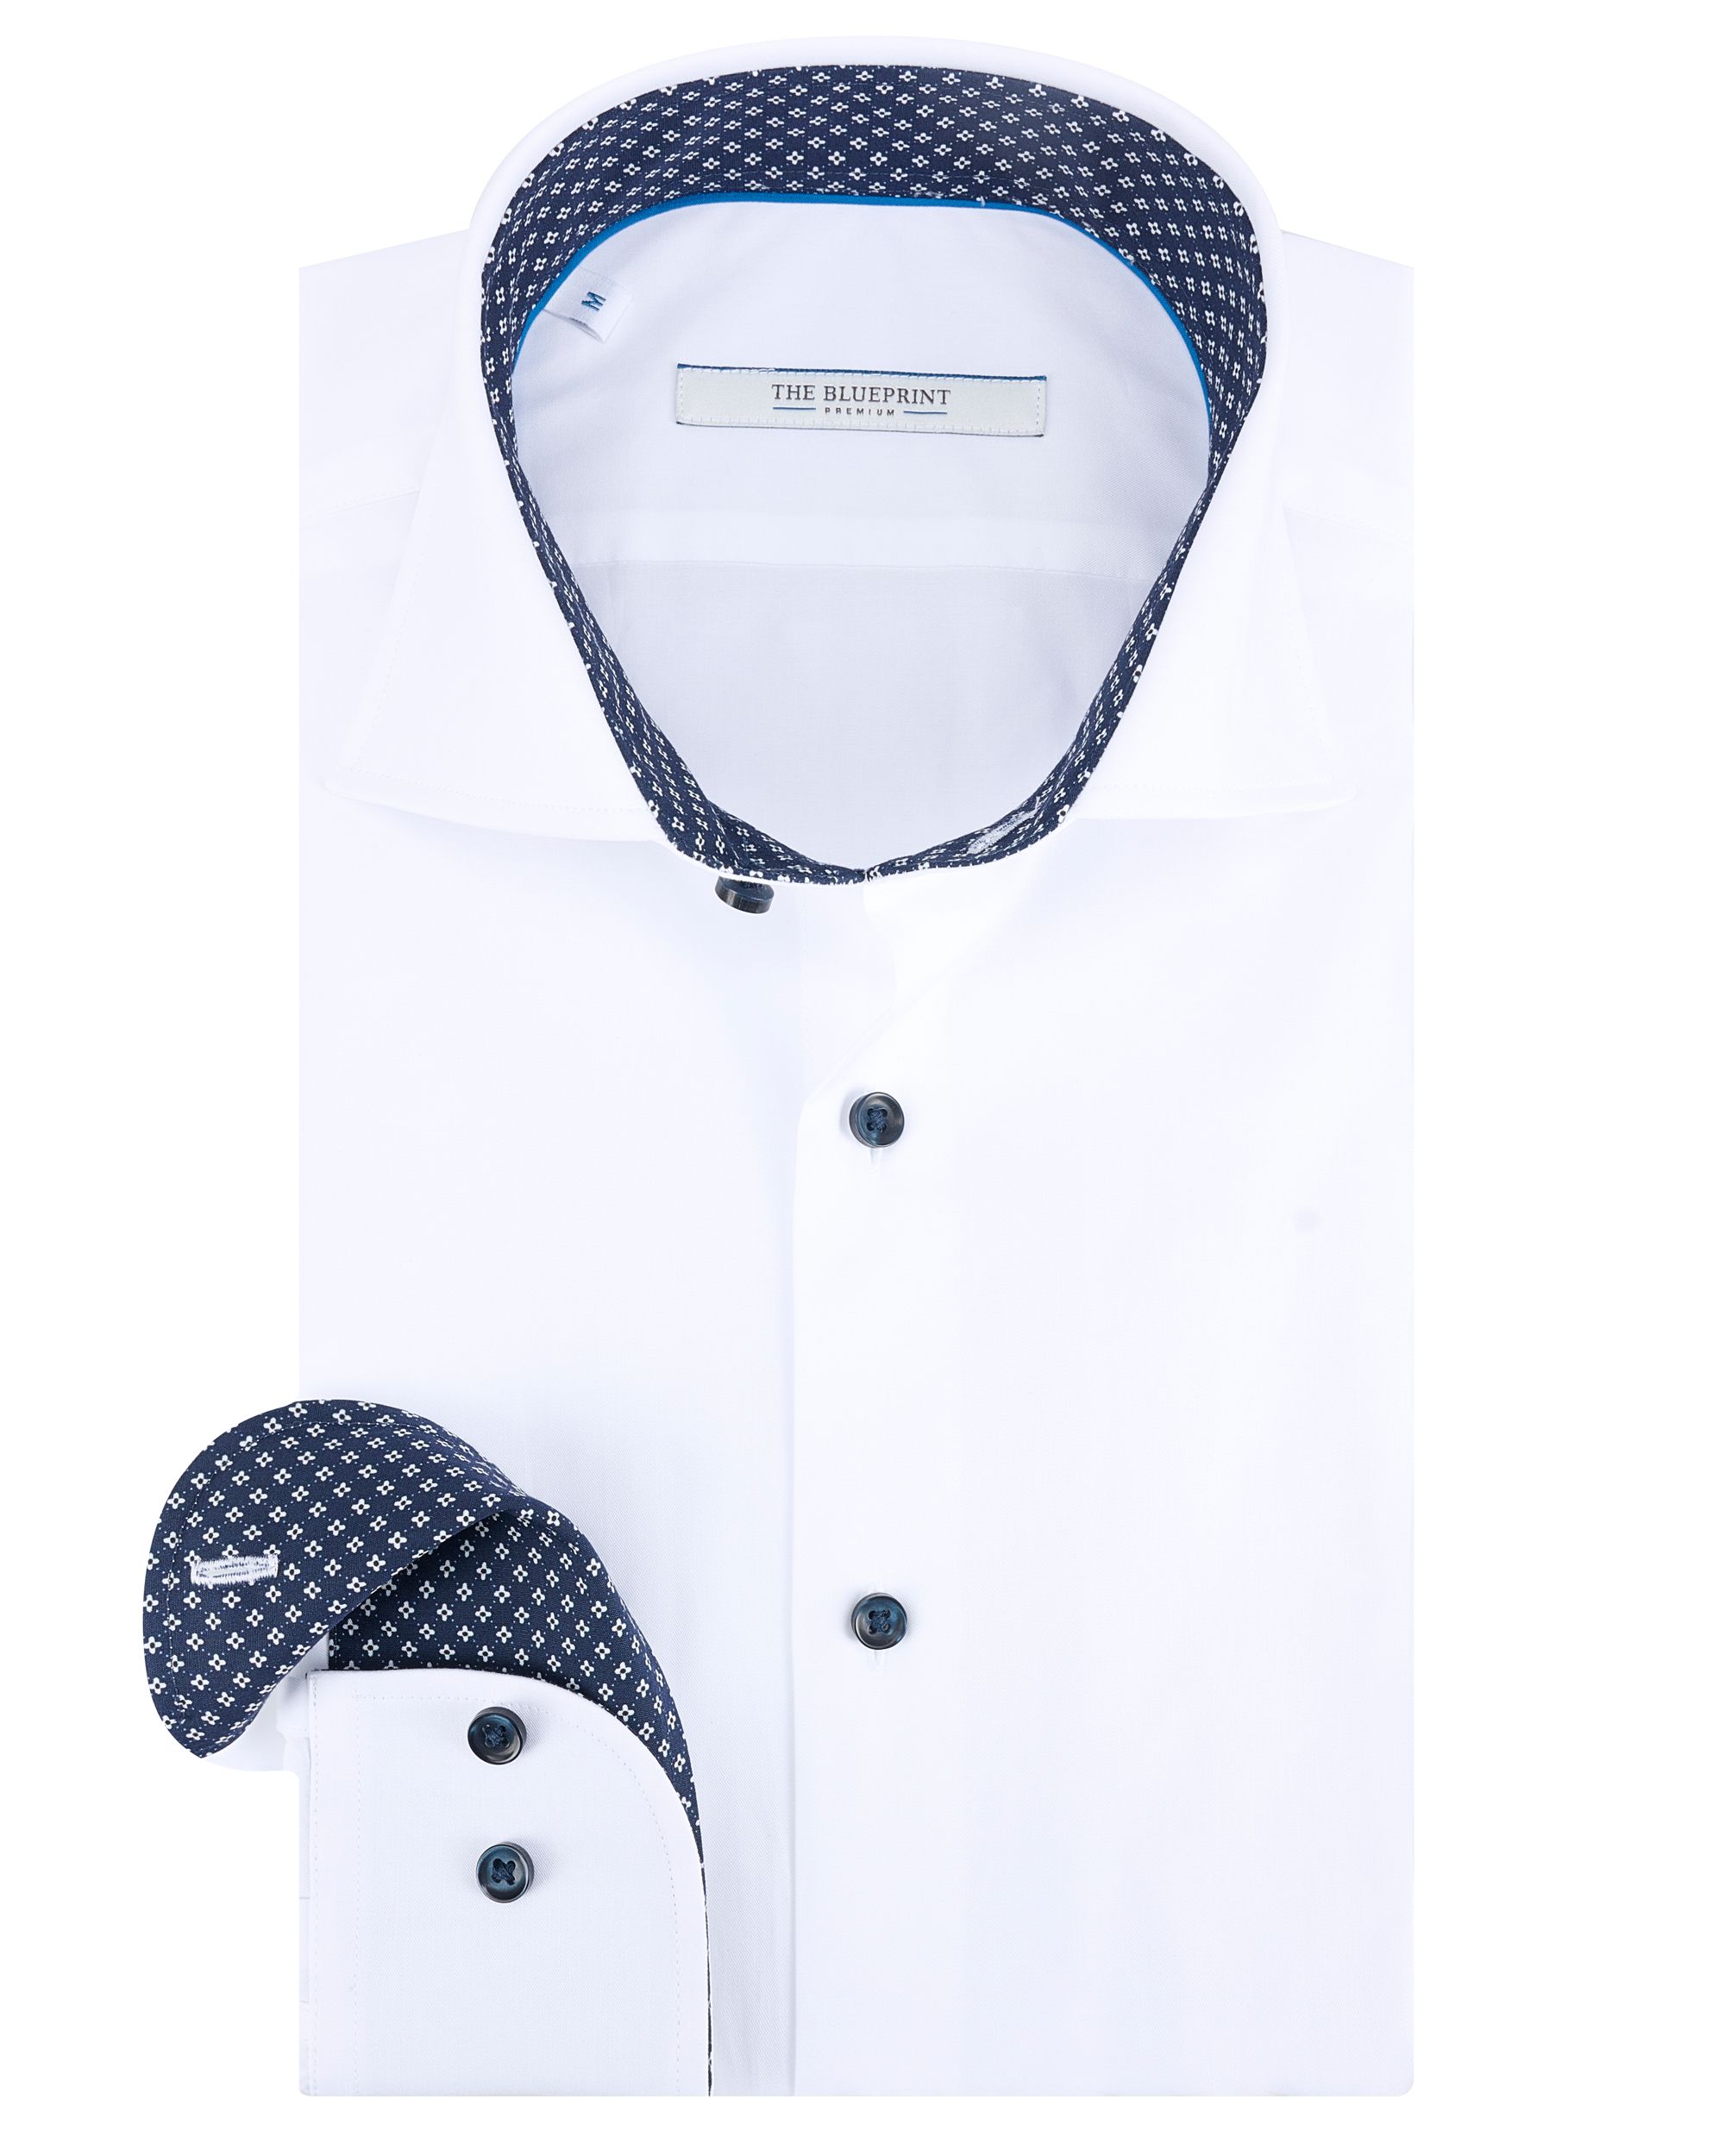 The BLUEPRINT Premium - Trendy Overhemd LM WHITE 092058-001-L